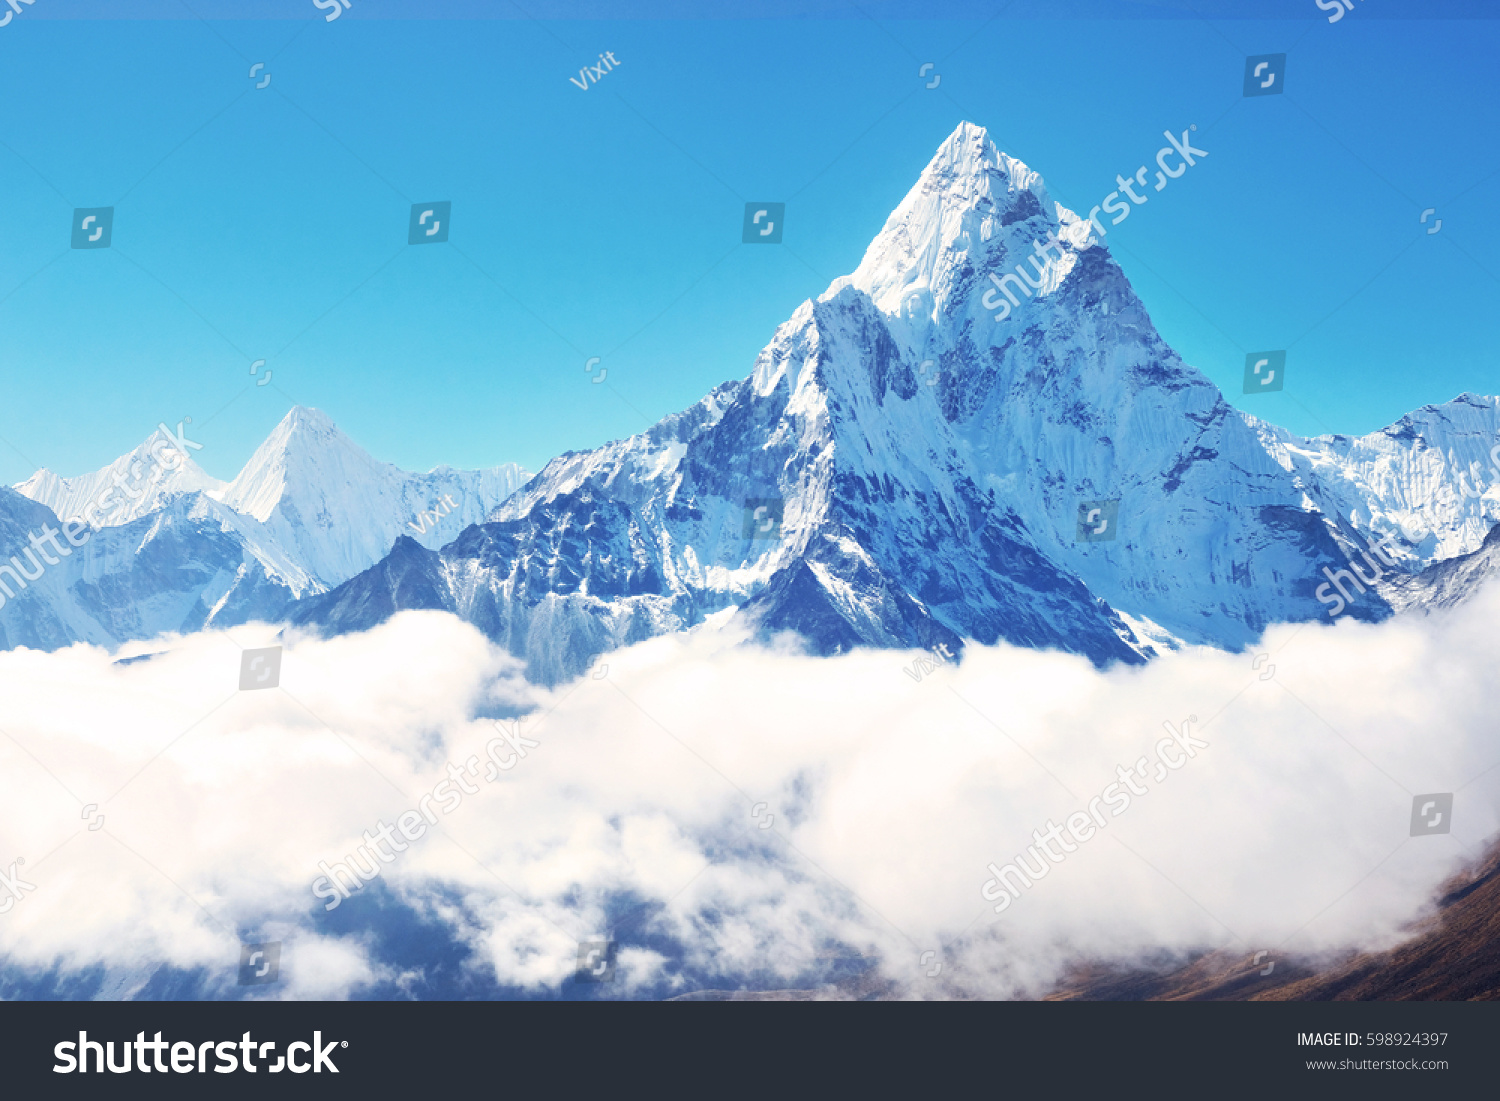 Mountain peak Everest. Highest mountain in the world. National Park, Nepal. #598924397